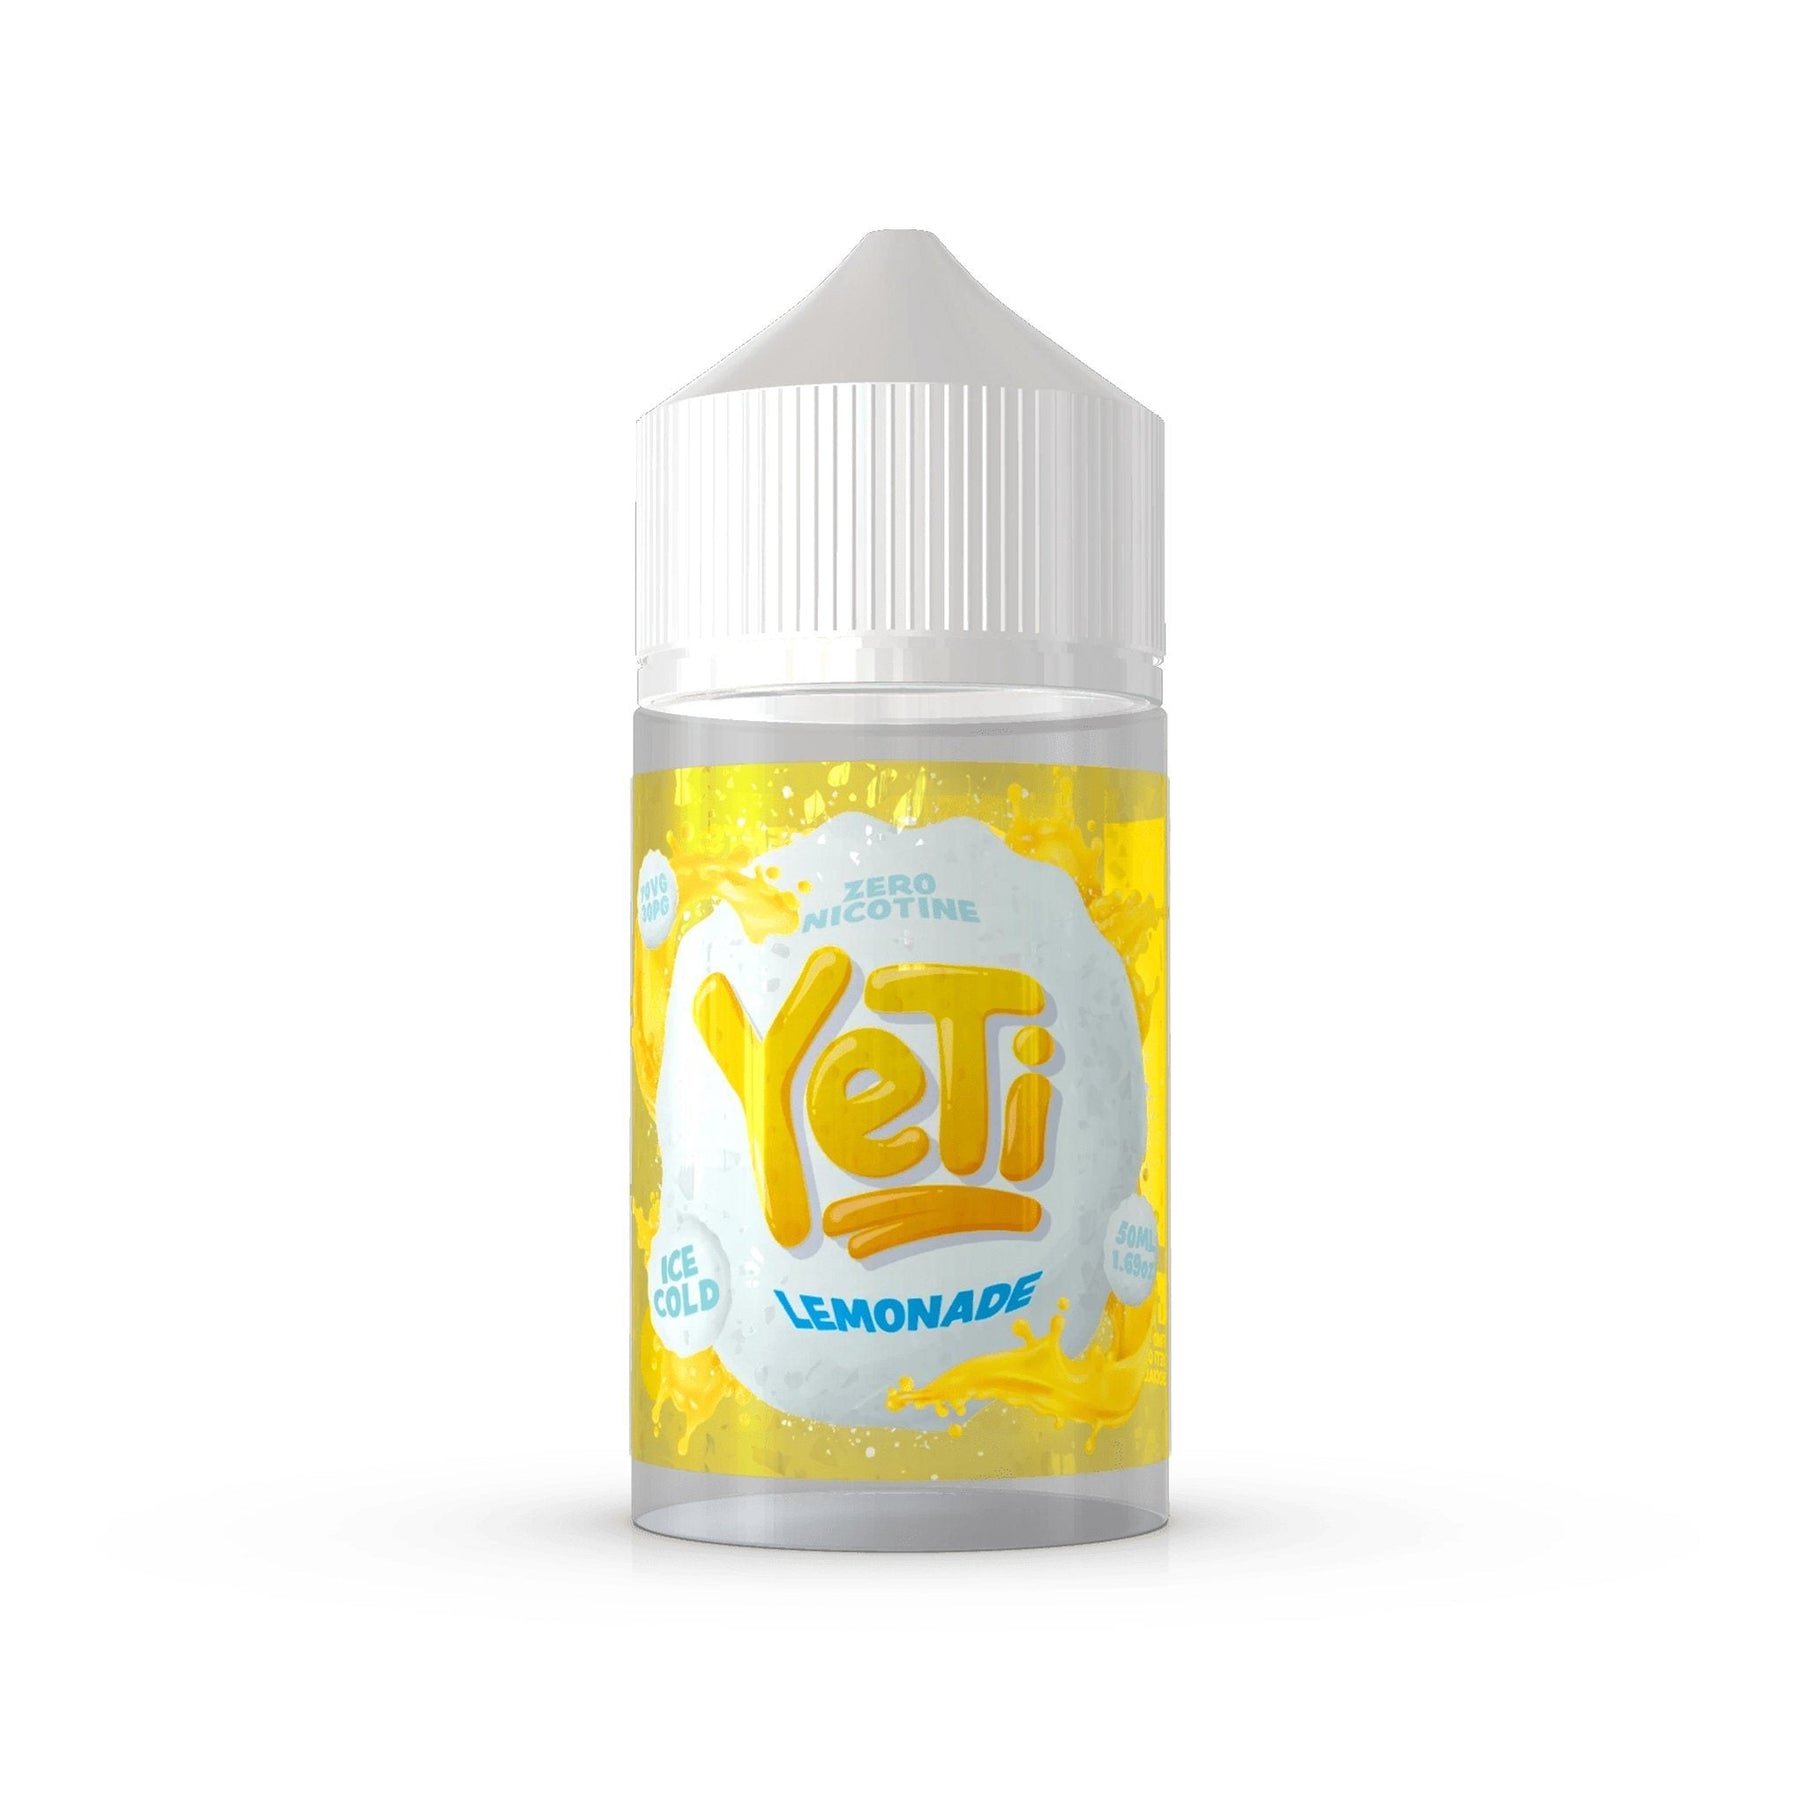 Yeti 50ml Short Fill E-Liquid Lemonade Ice